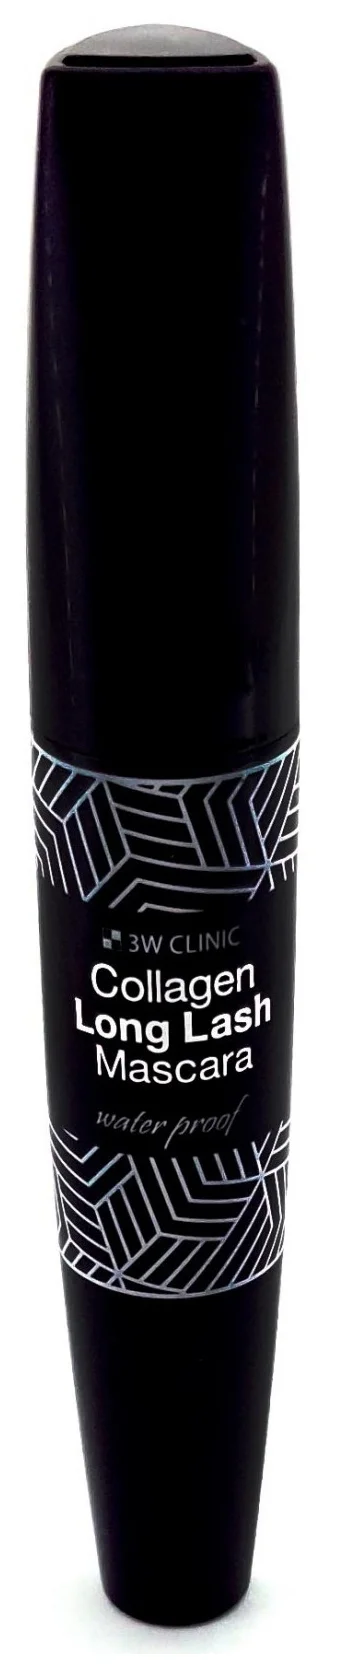 3W Clinic Collagen Long Lash